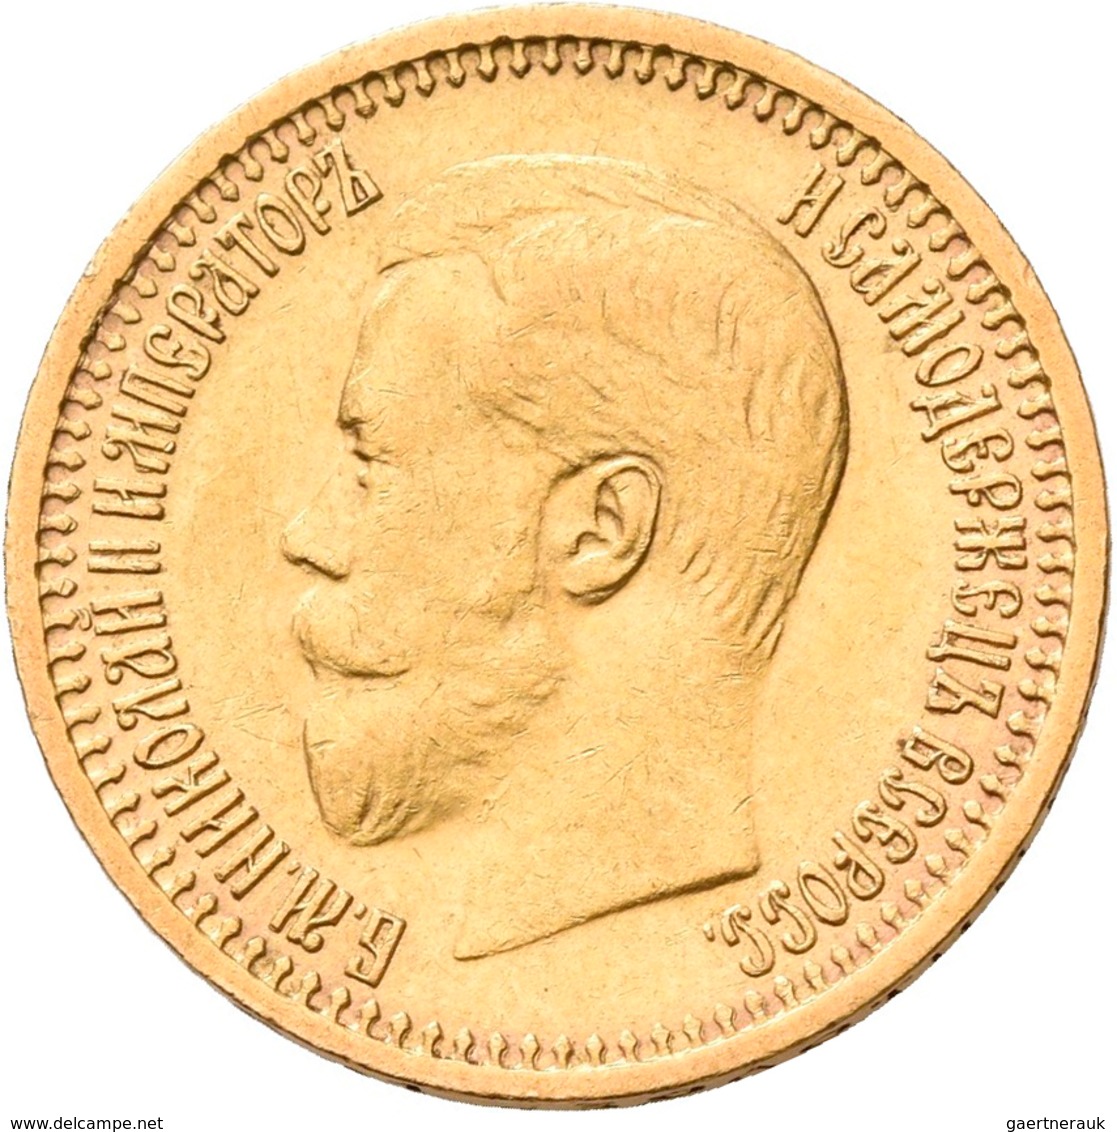 Russland - Anlagegold: Nikolaus II. 1894-1917: Lot 4 Goldmünzen: 5 Rubel 1899; 7,5 Rubel 1897; 10 Ru